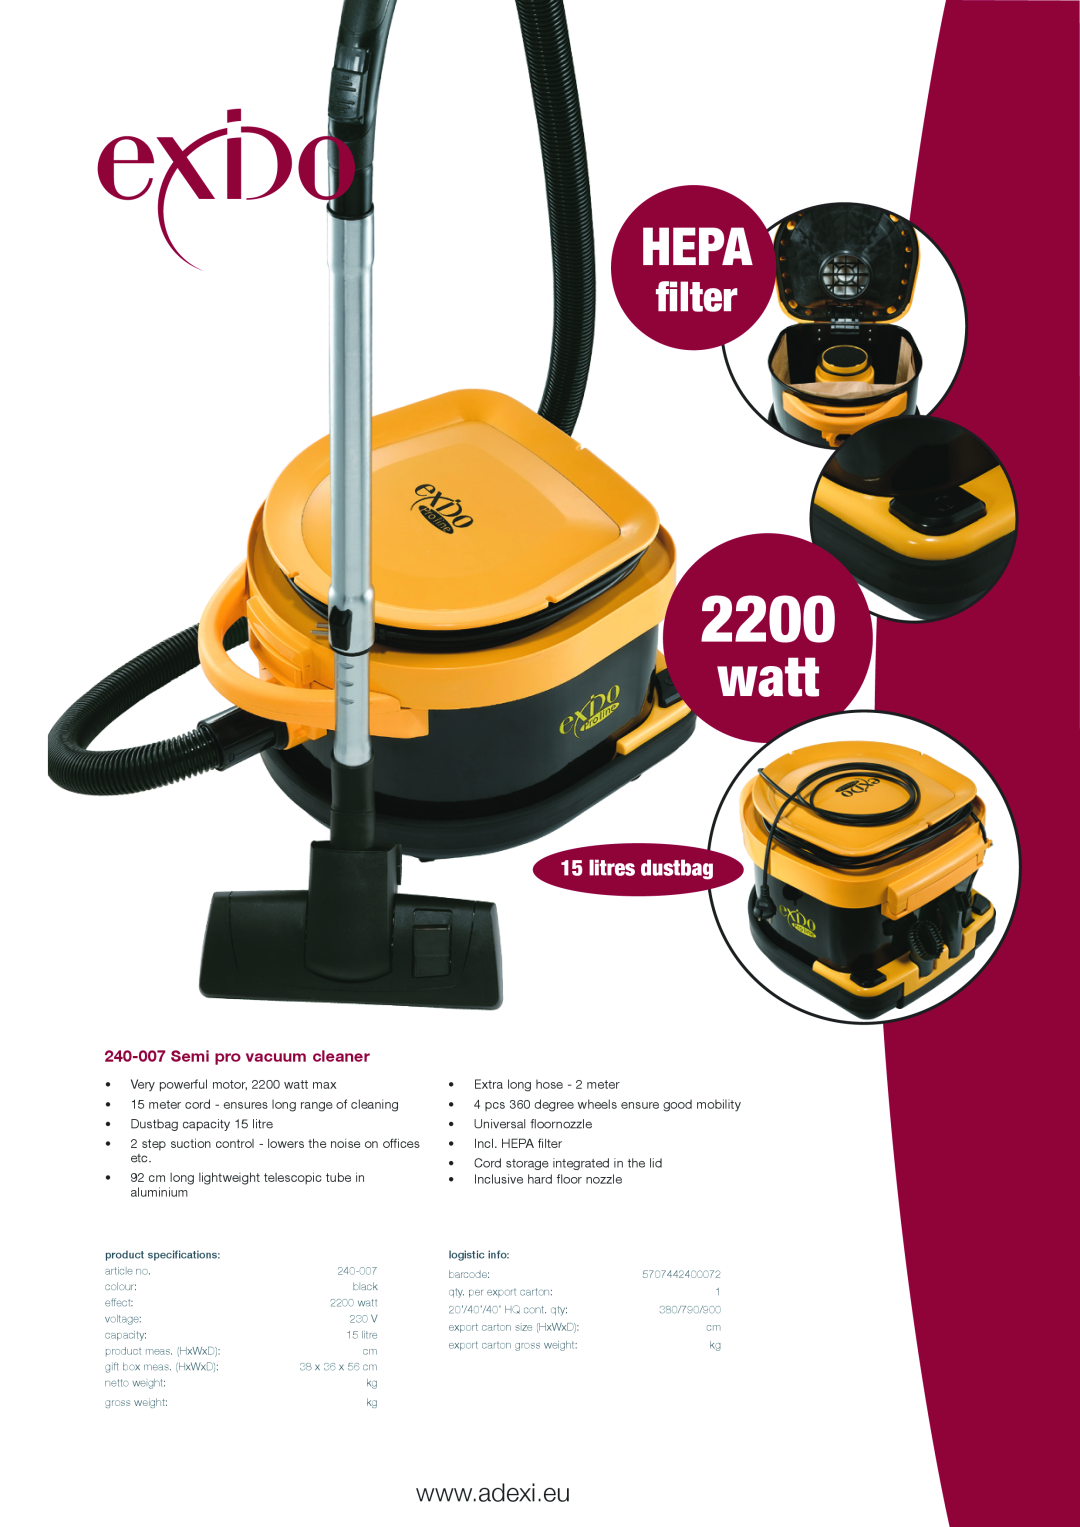 Melissa specifications 2200, watt, Hepa, filter, litres dustbag, 240-007Semi pro vacuum cleaner 